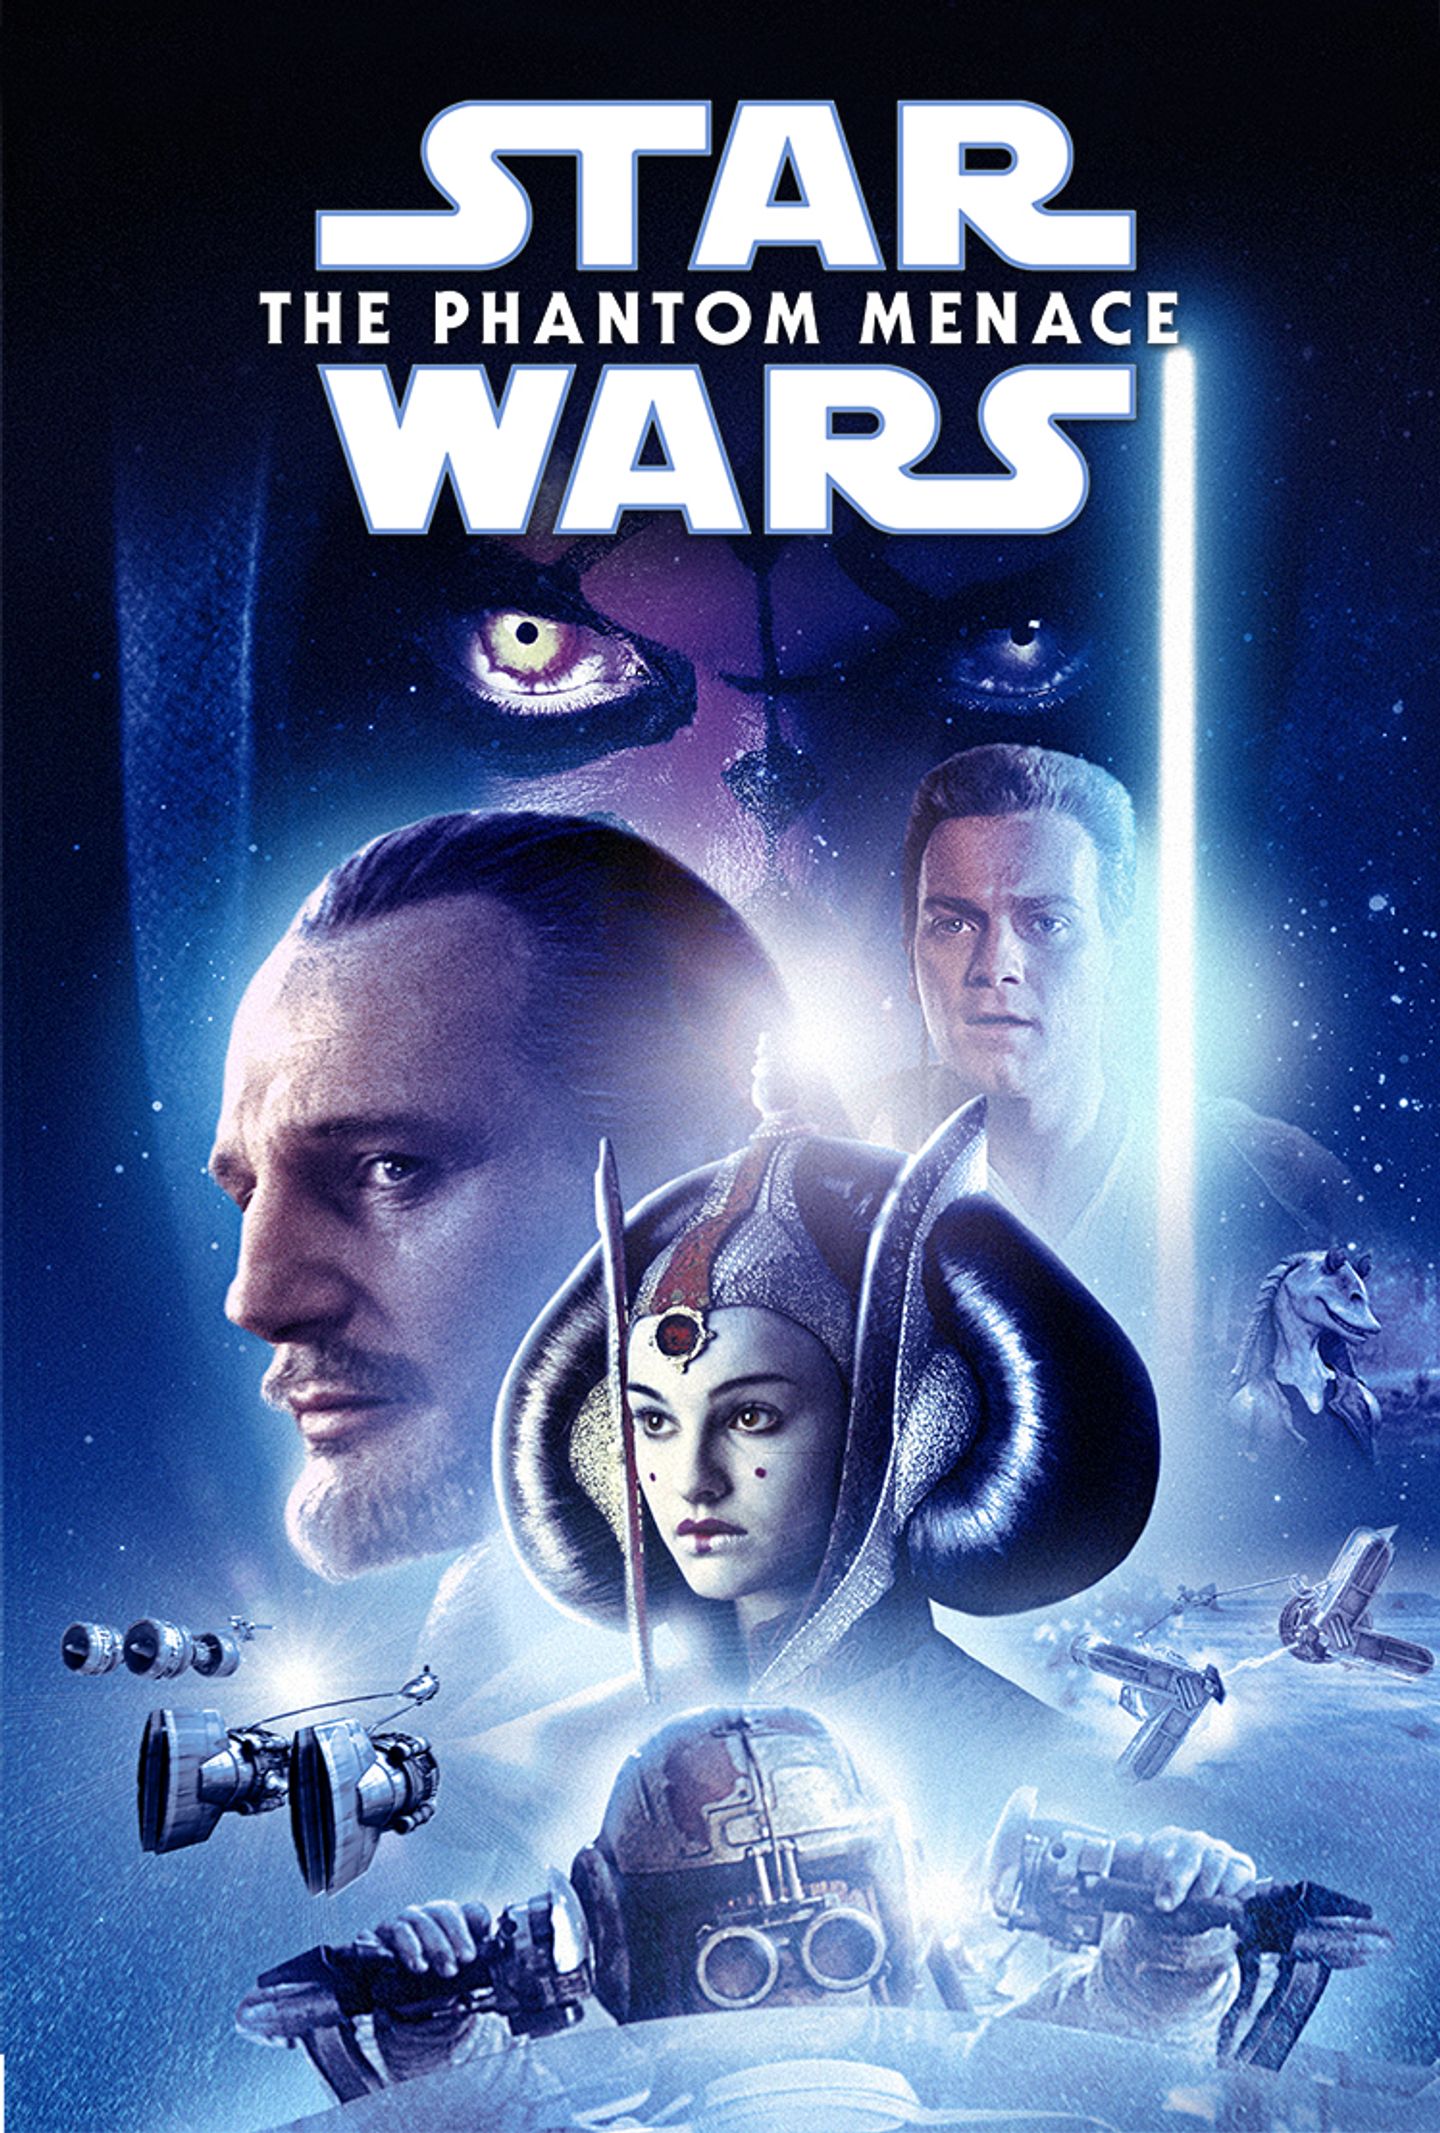 Star Wars Episode 1: The Phantom Menace 25 års jubileum - Plakat